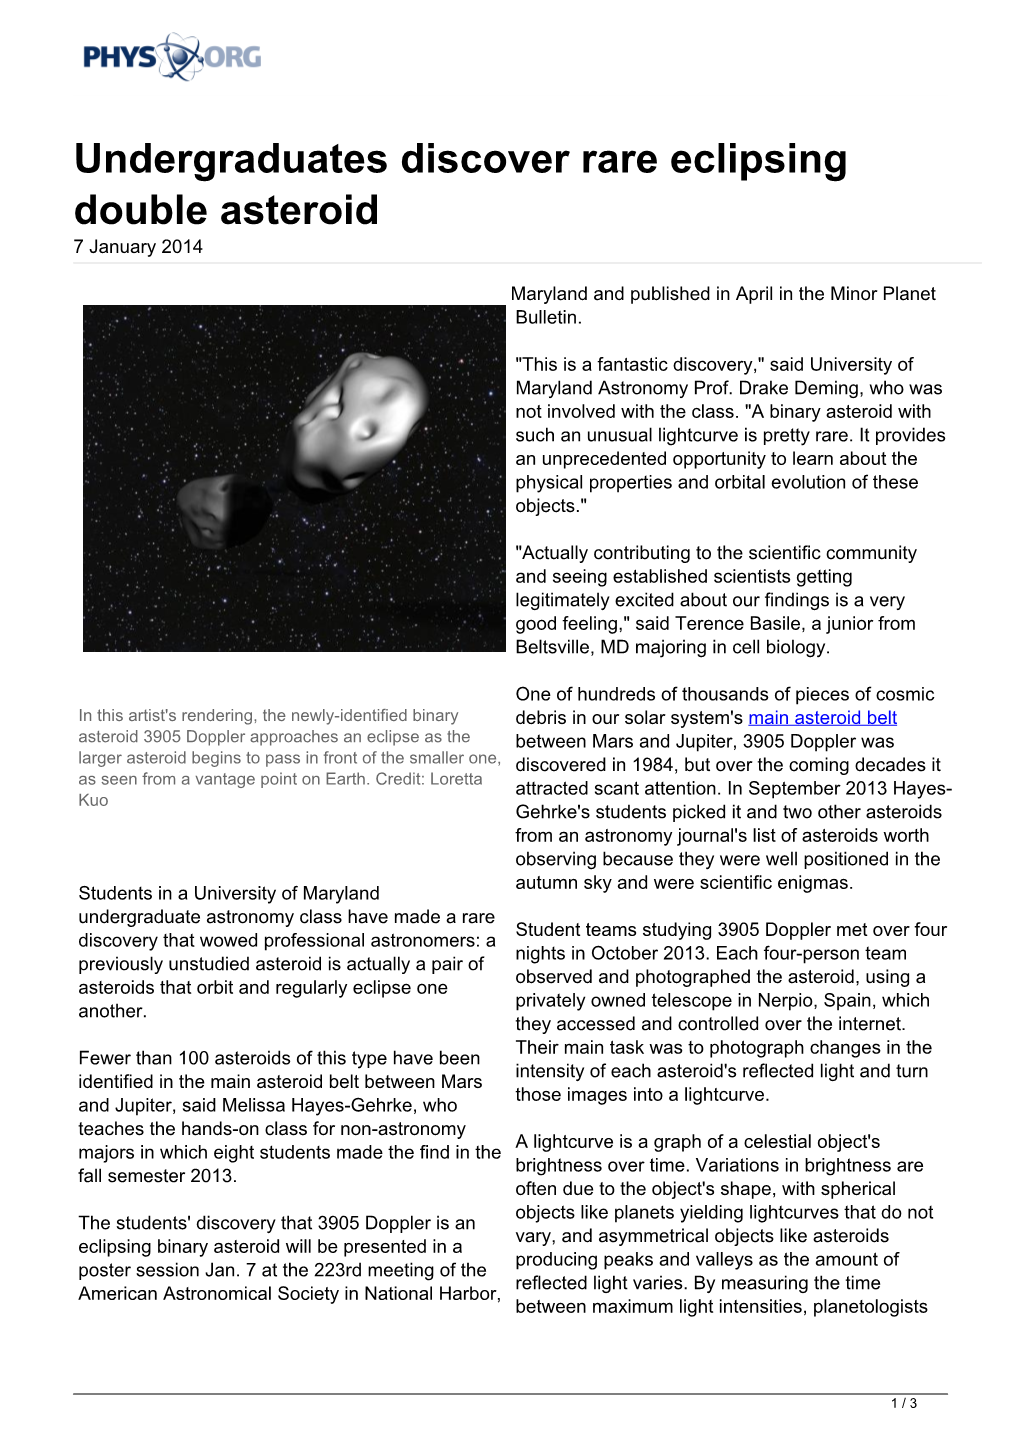 Undergraduates Discover Rare Eclipsing Double Asteroid 7 January 2014